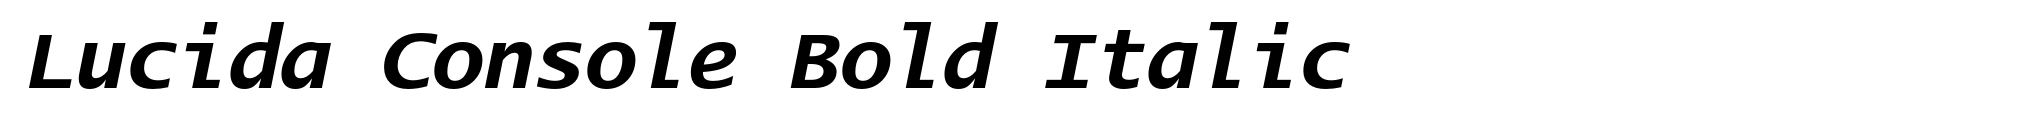 Lucida Console Bold Italic image